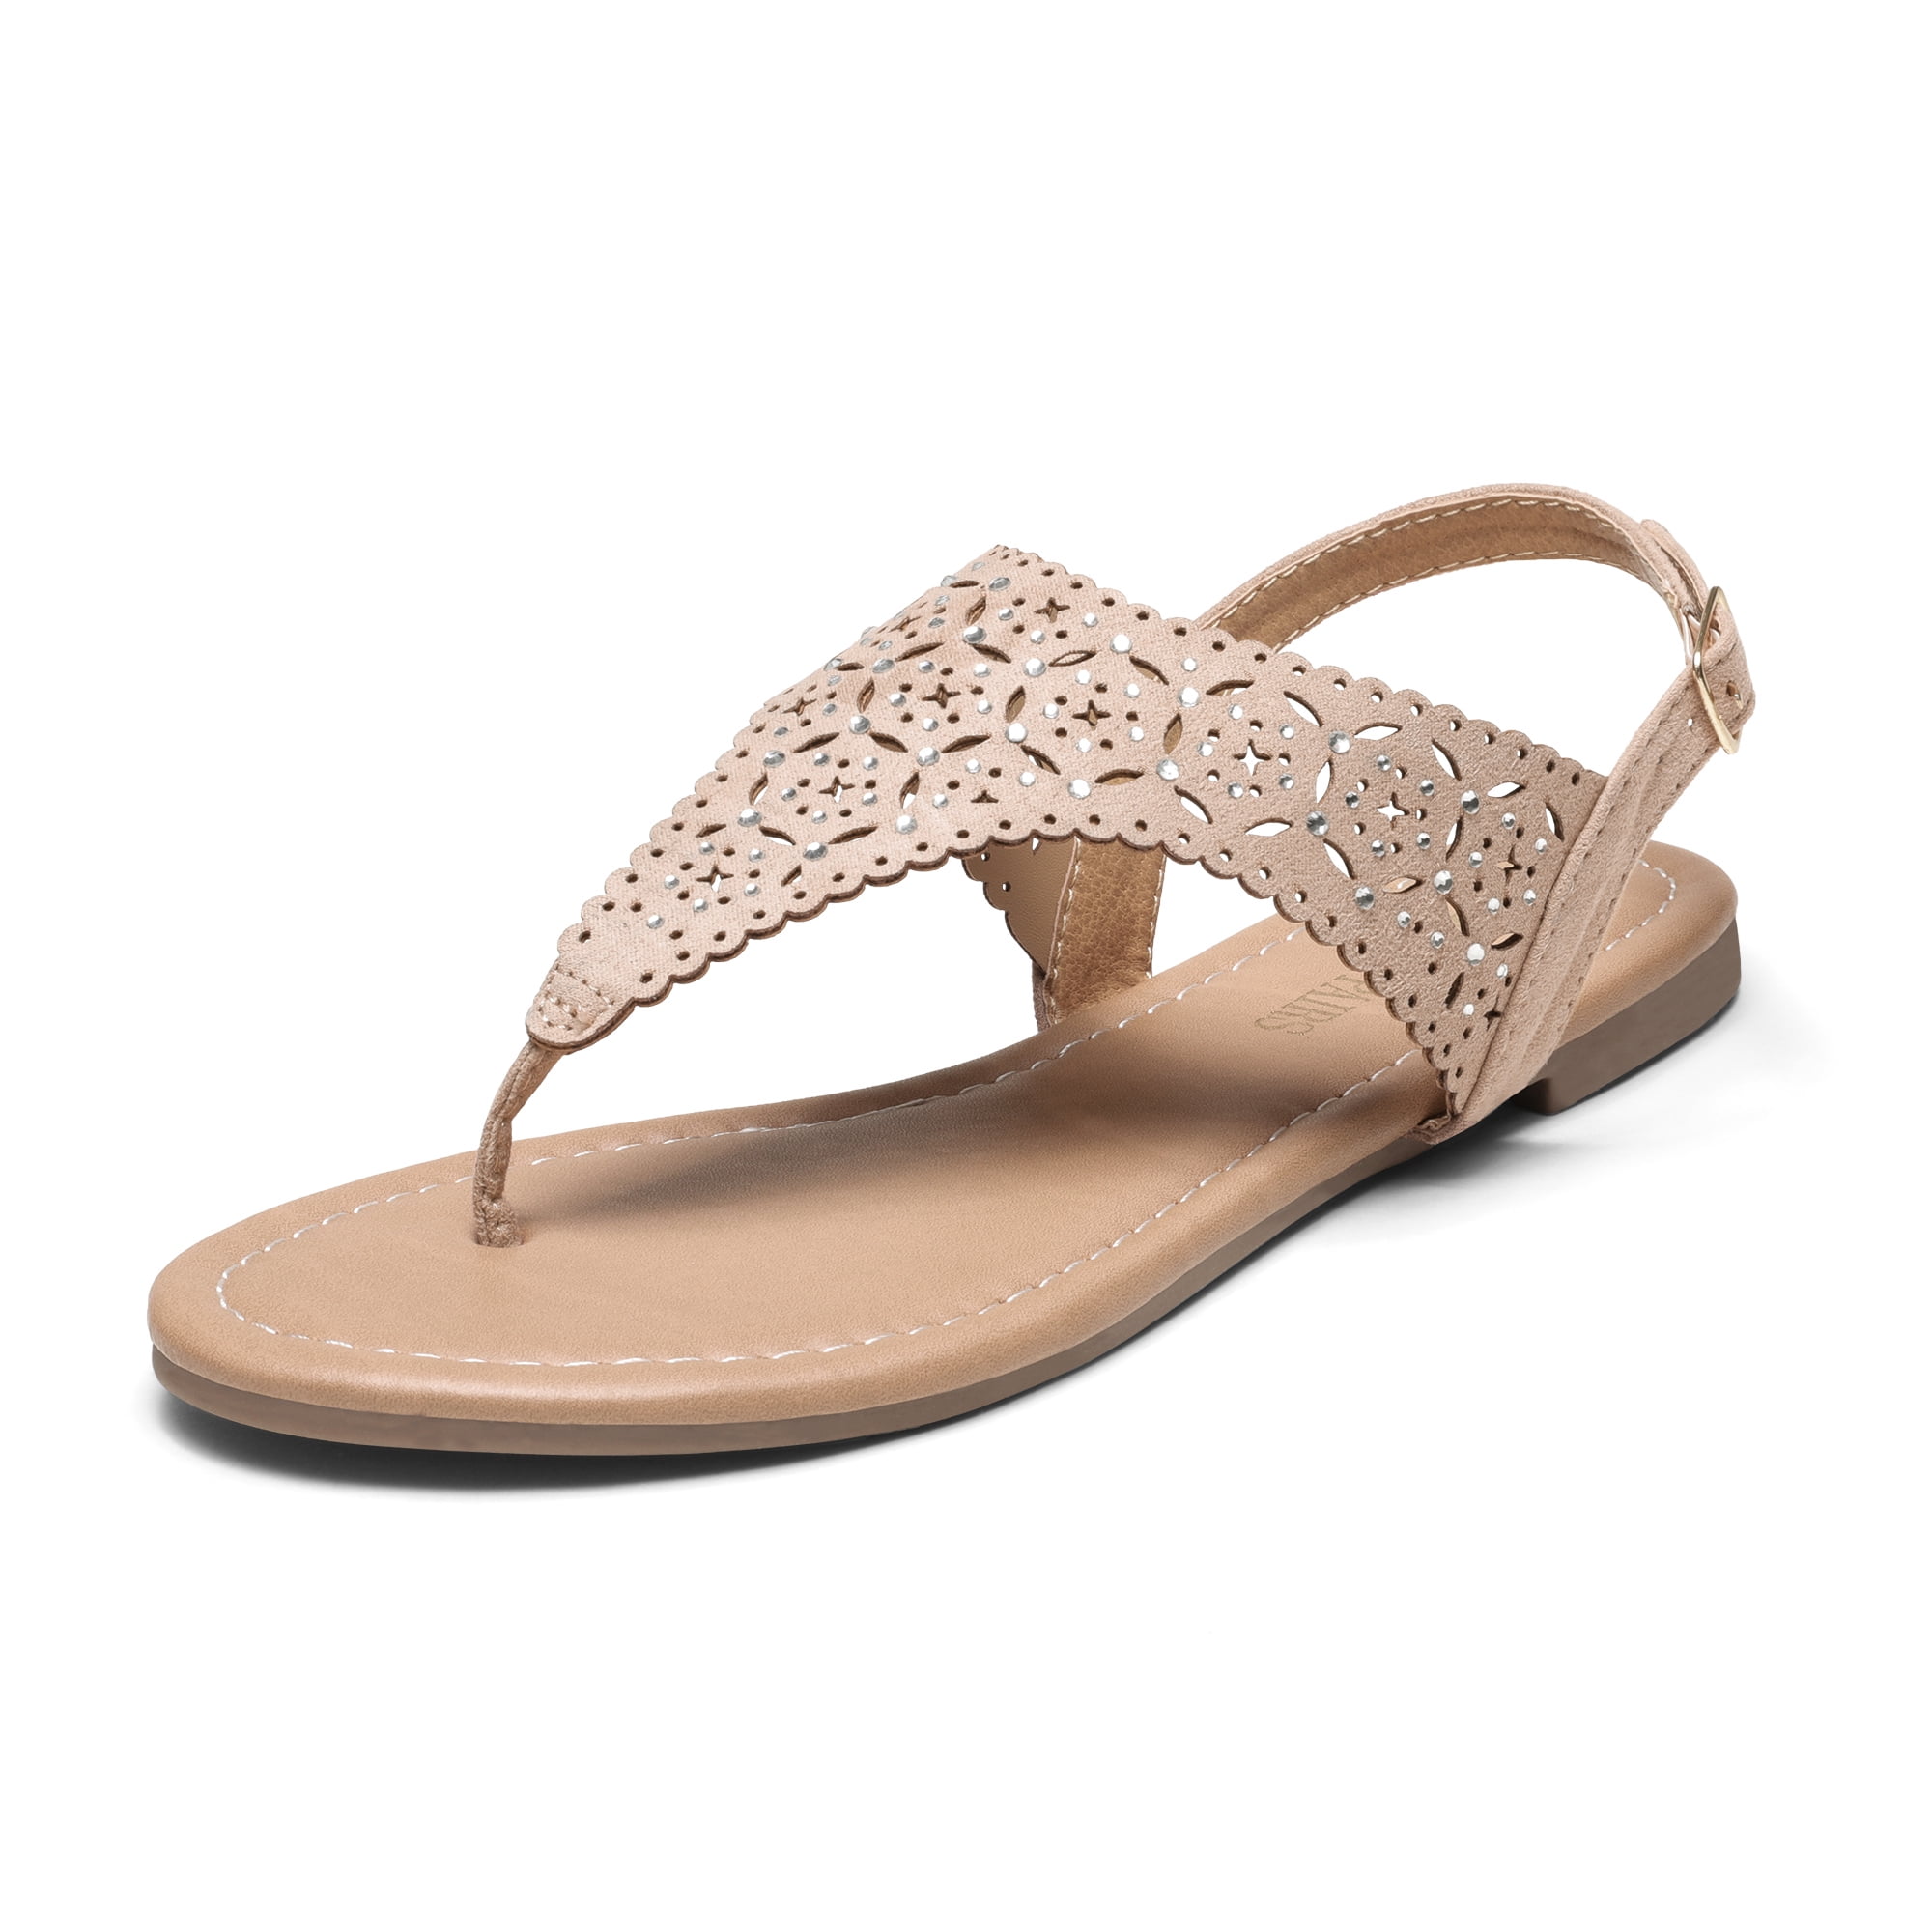 TIFENNY Women Summer Fashion Sandals Rhinestone Flats Platform Wedges Shoes Beach Flip Flops Slipper 